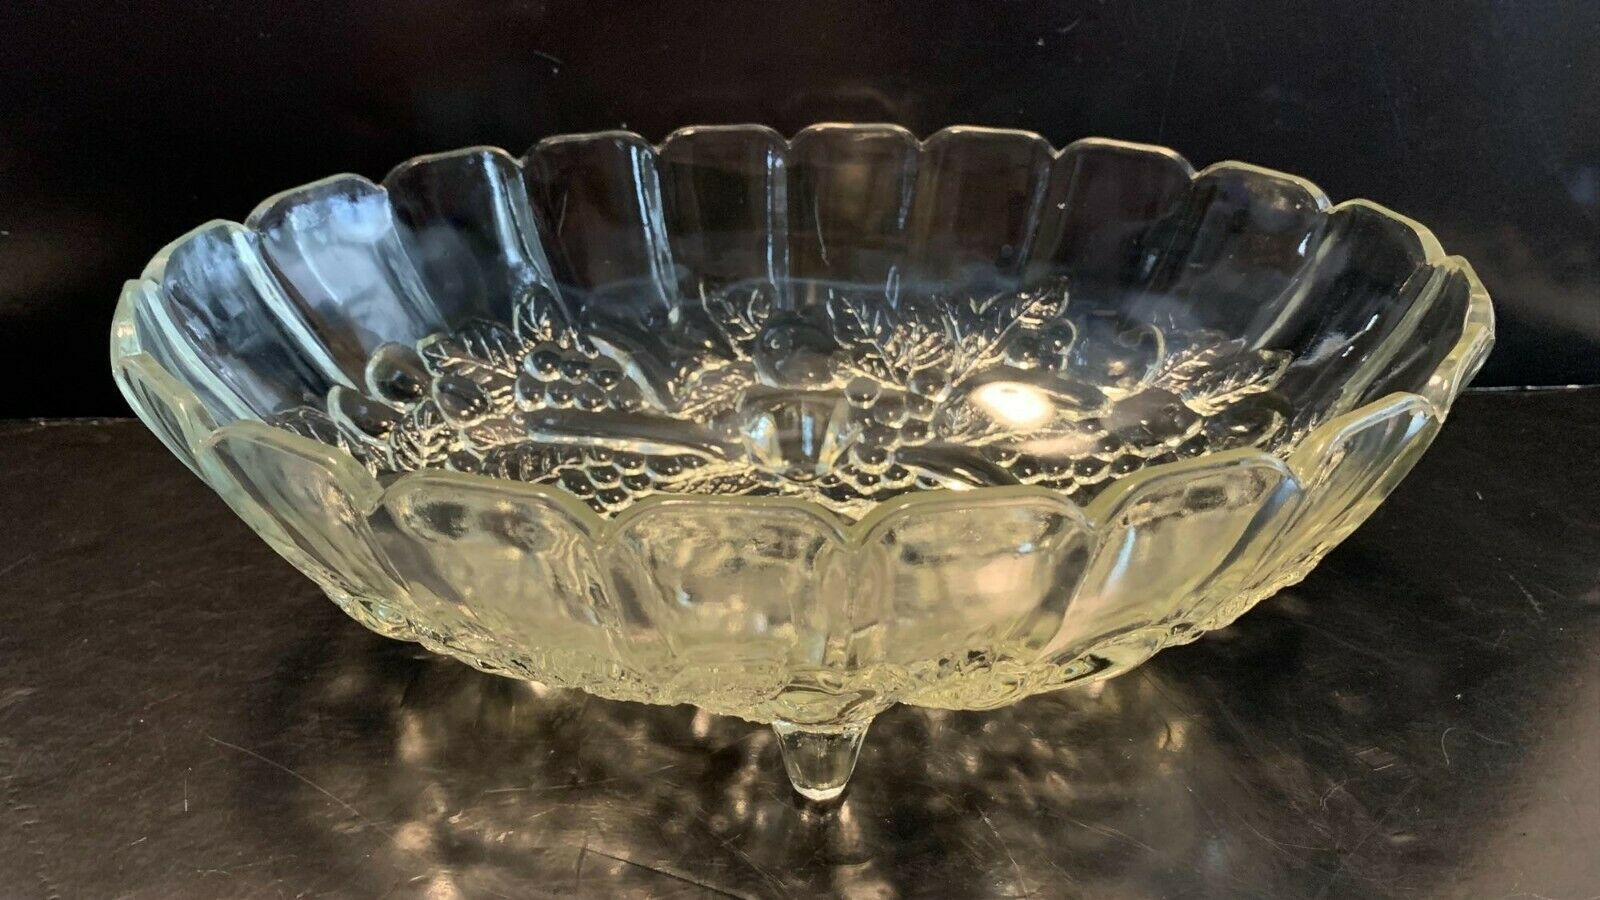 Vintage clear glass fruit bowl